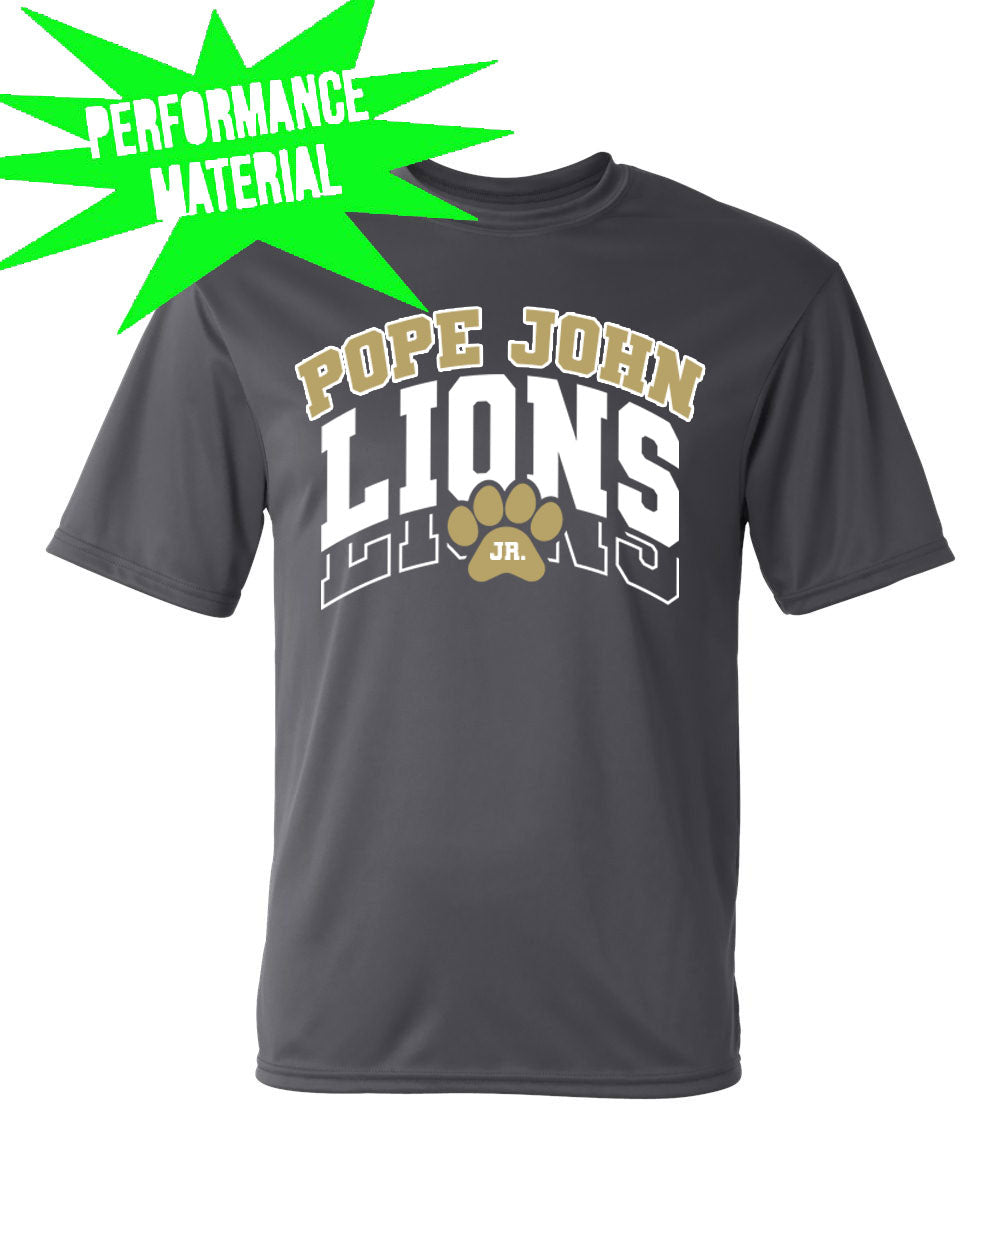 Lions Cheer Performance Material design 1 T-Shirt